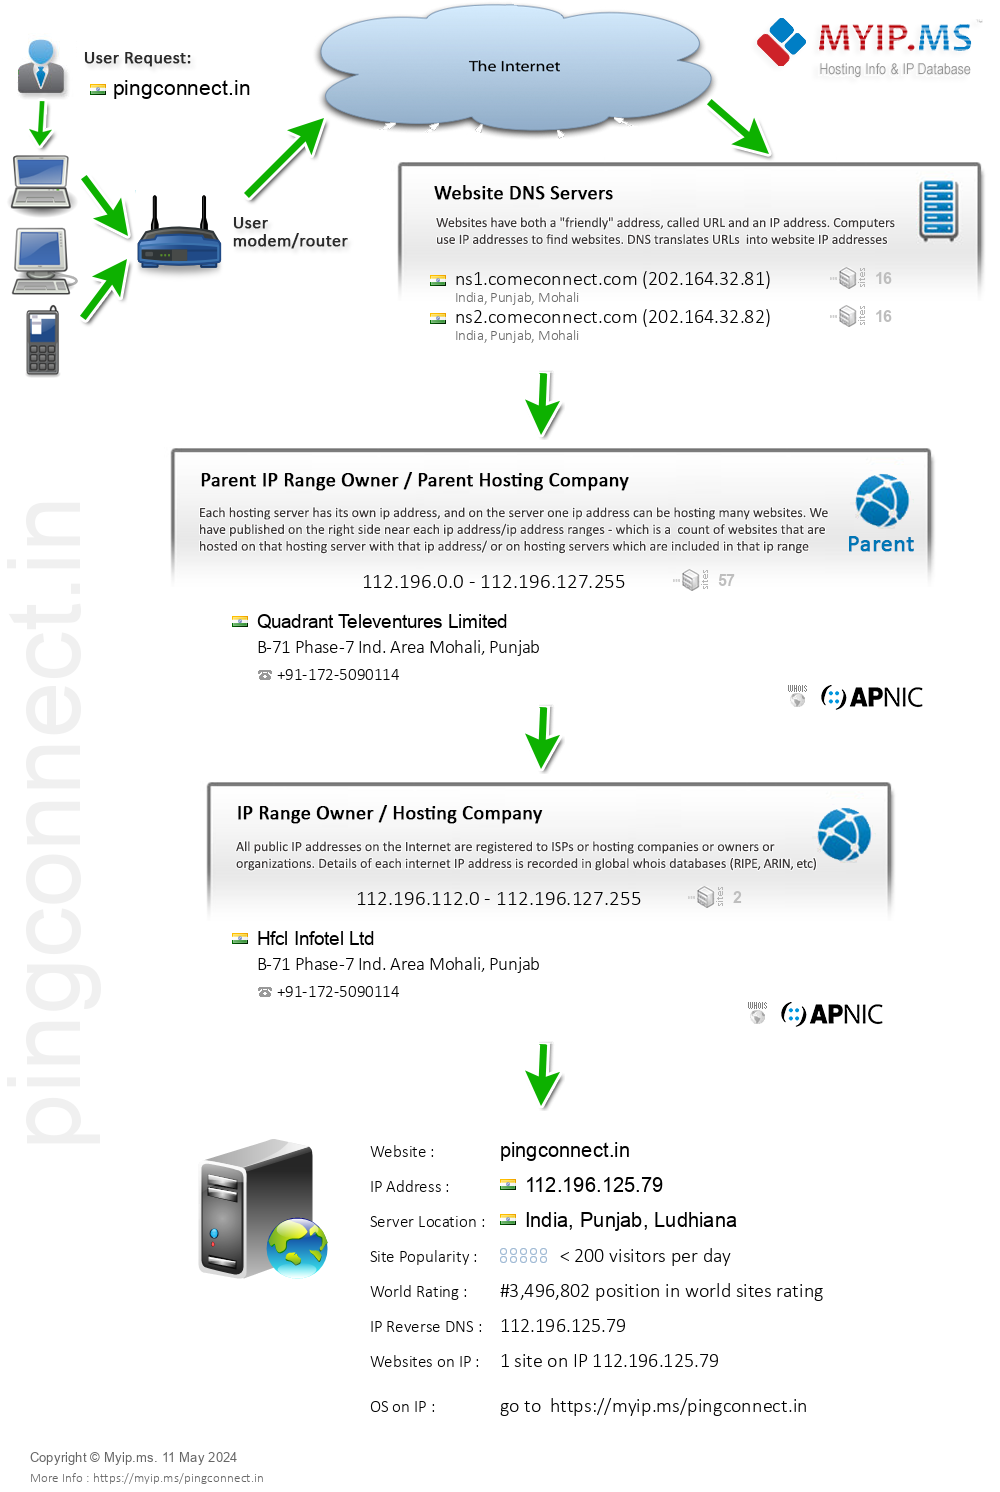 Pingconnect.in - Website Hosting Visual IP Diagram